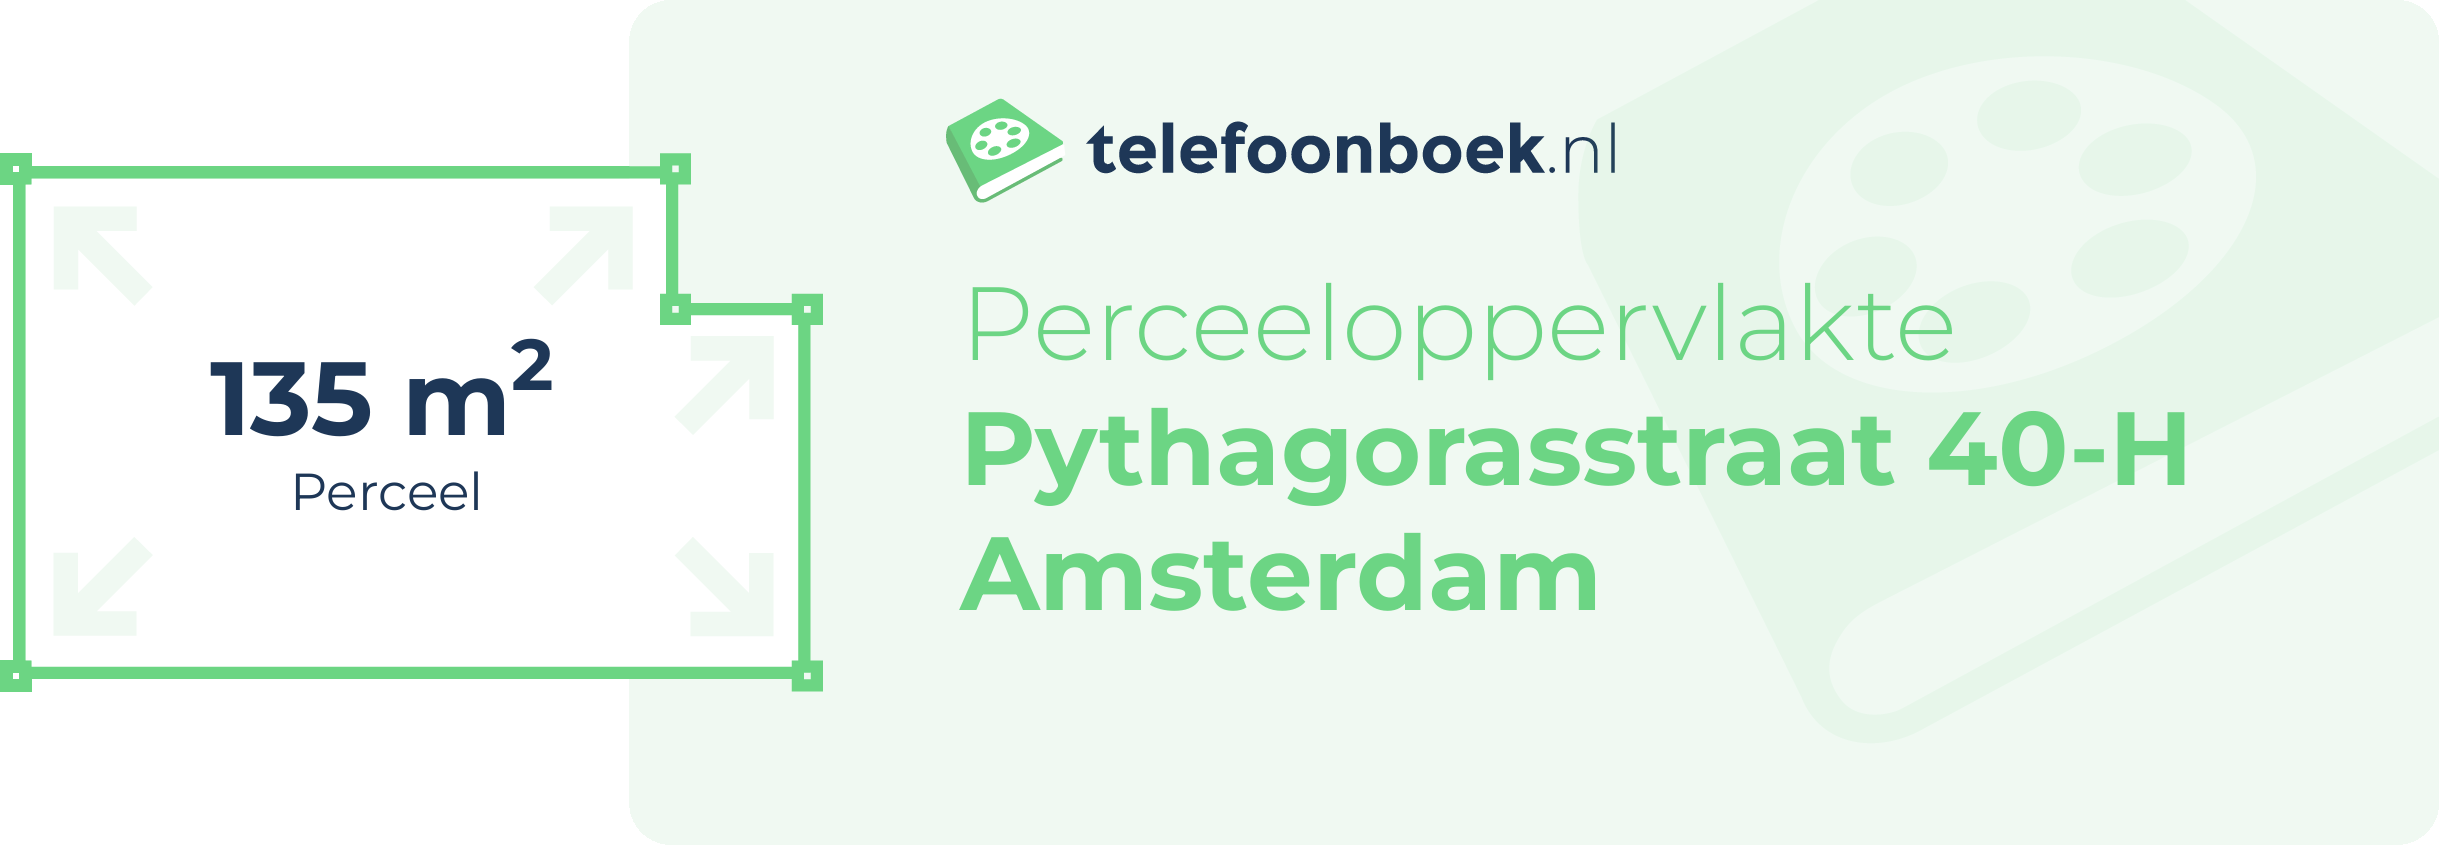 Perceeloppervlakte Pythagorasstraat 40-H Amsterdam